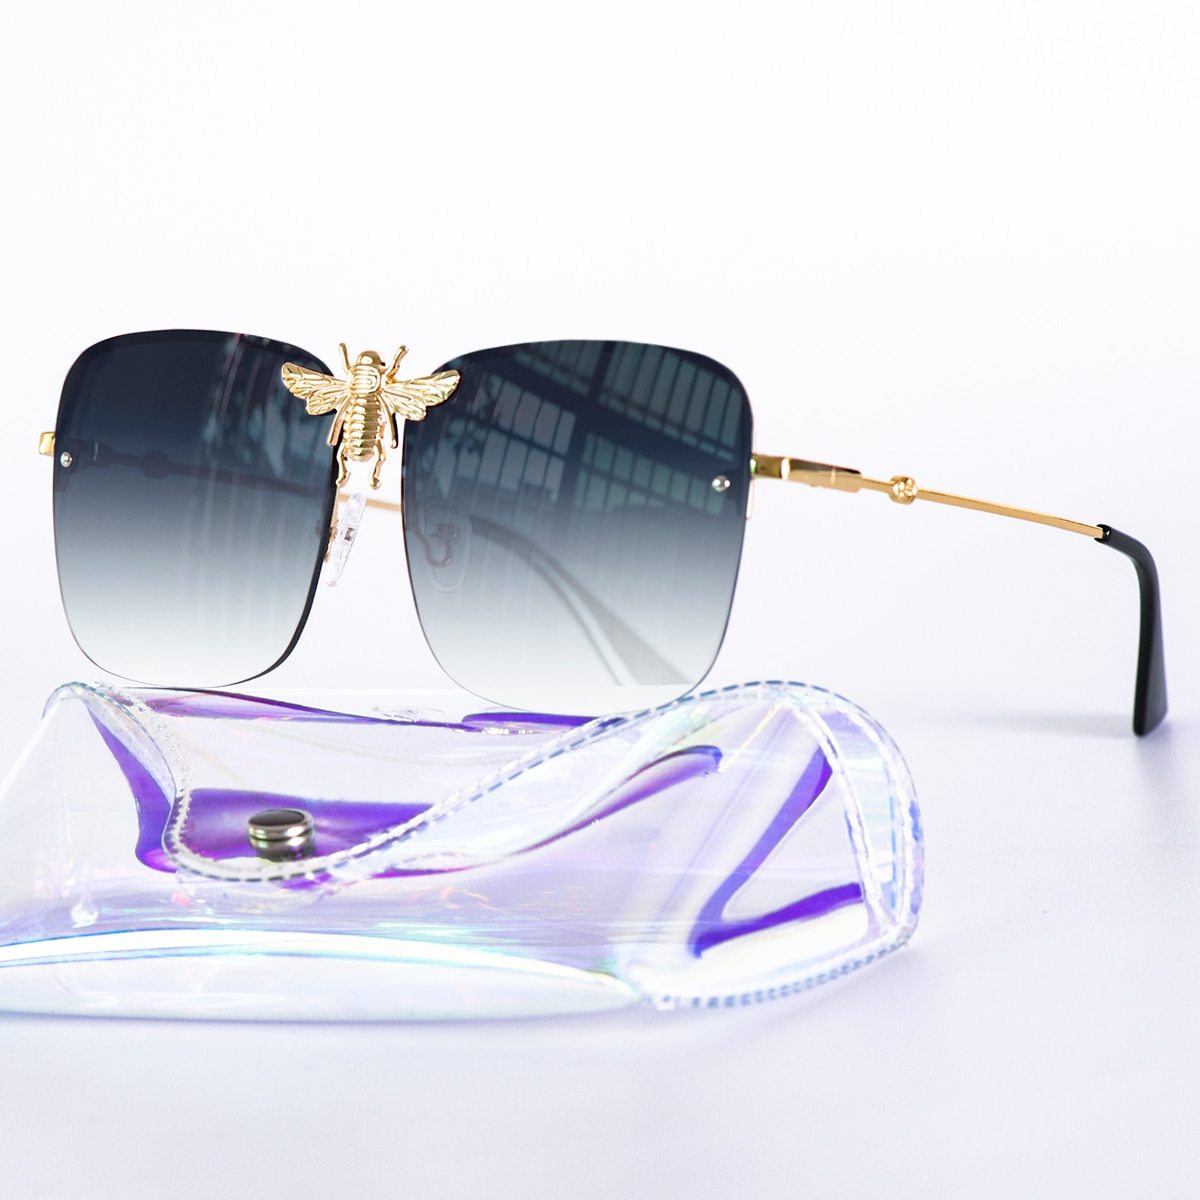 Trendy Square Bee Sunglasses For Women -Unique and Classy